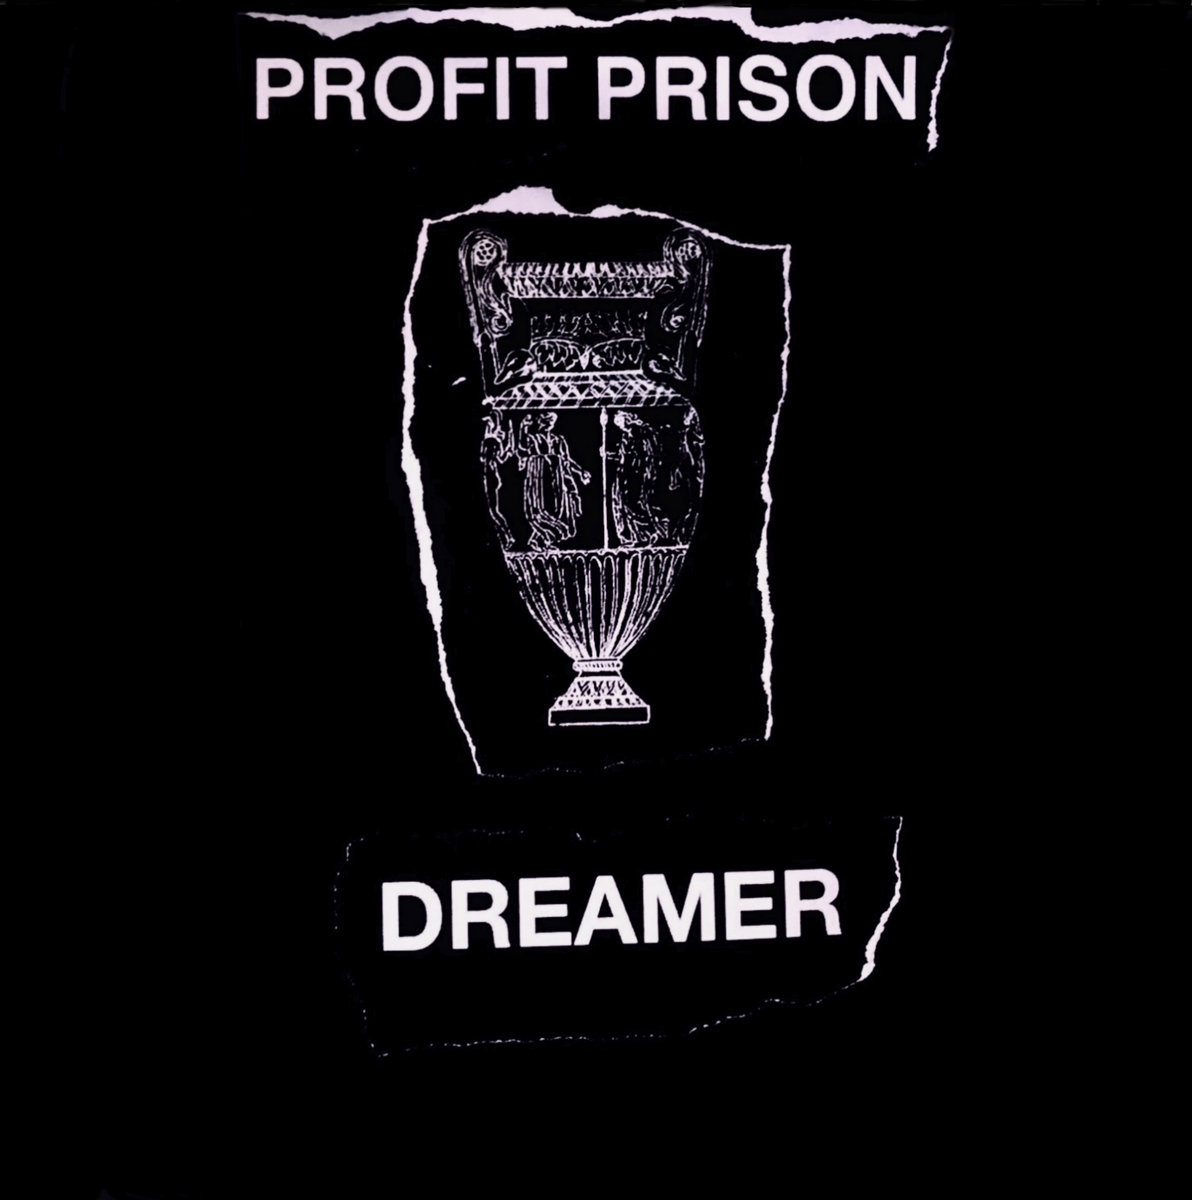 News – Profit Prison – Dreamer (Tiny Vipers cover)